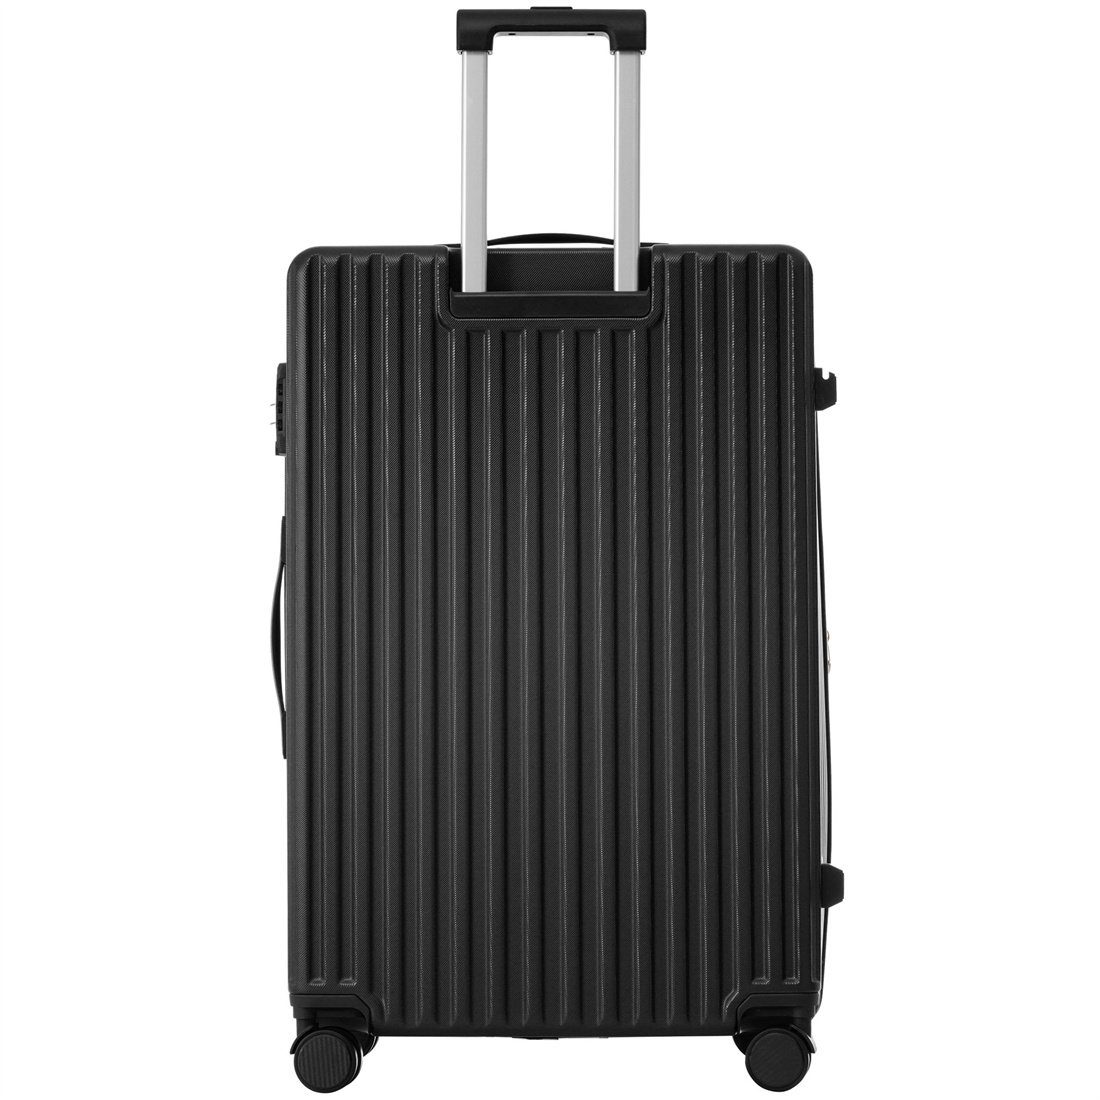 DÖRÖY schwarz Koffer Hartschalen-Koffer,Rollkoffer,Reisekoffer,65*43*28cm,